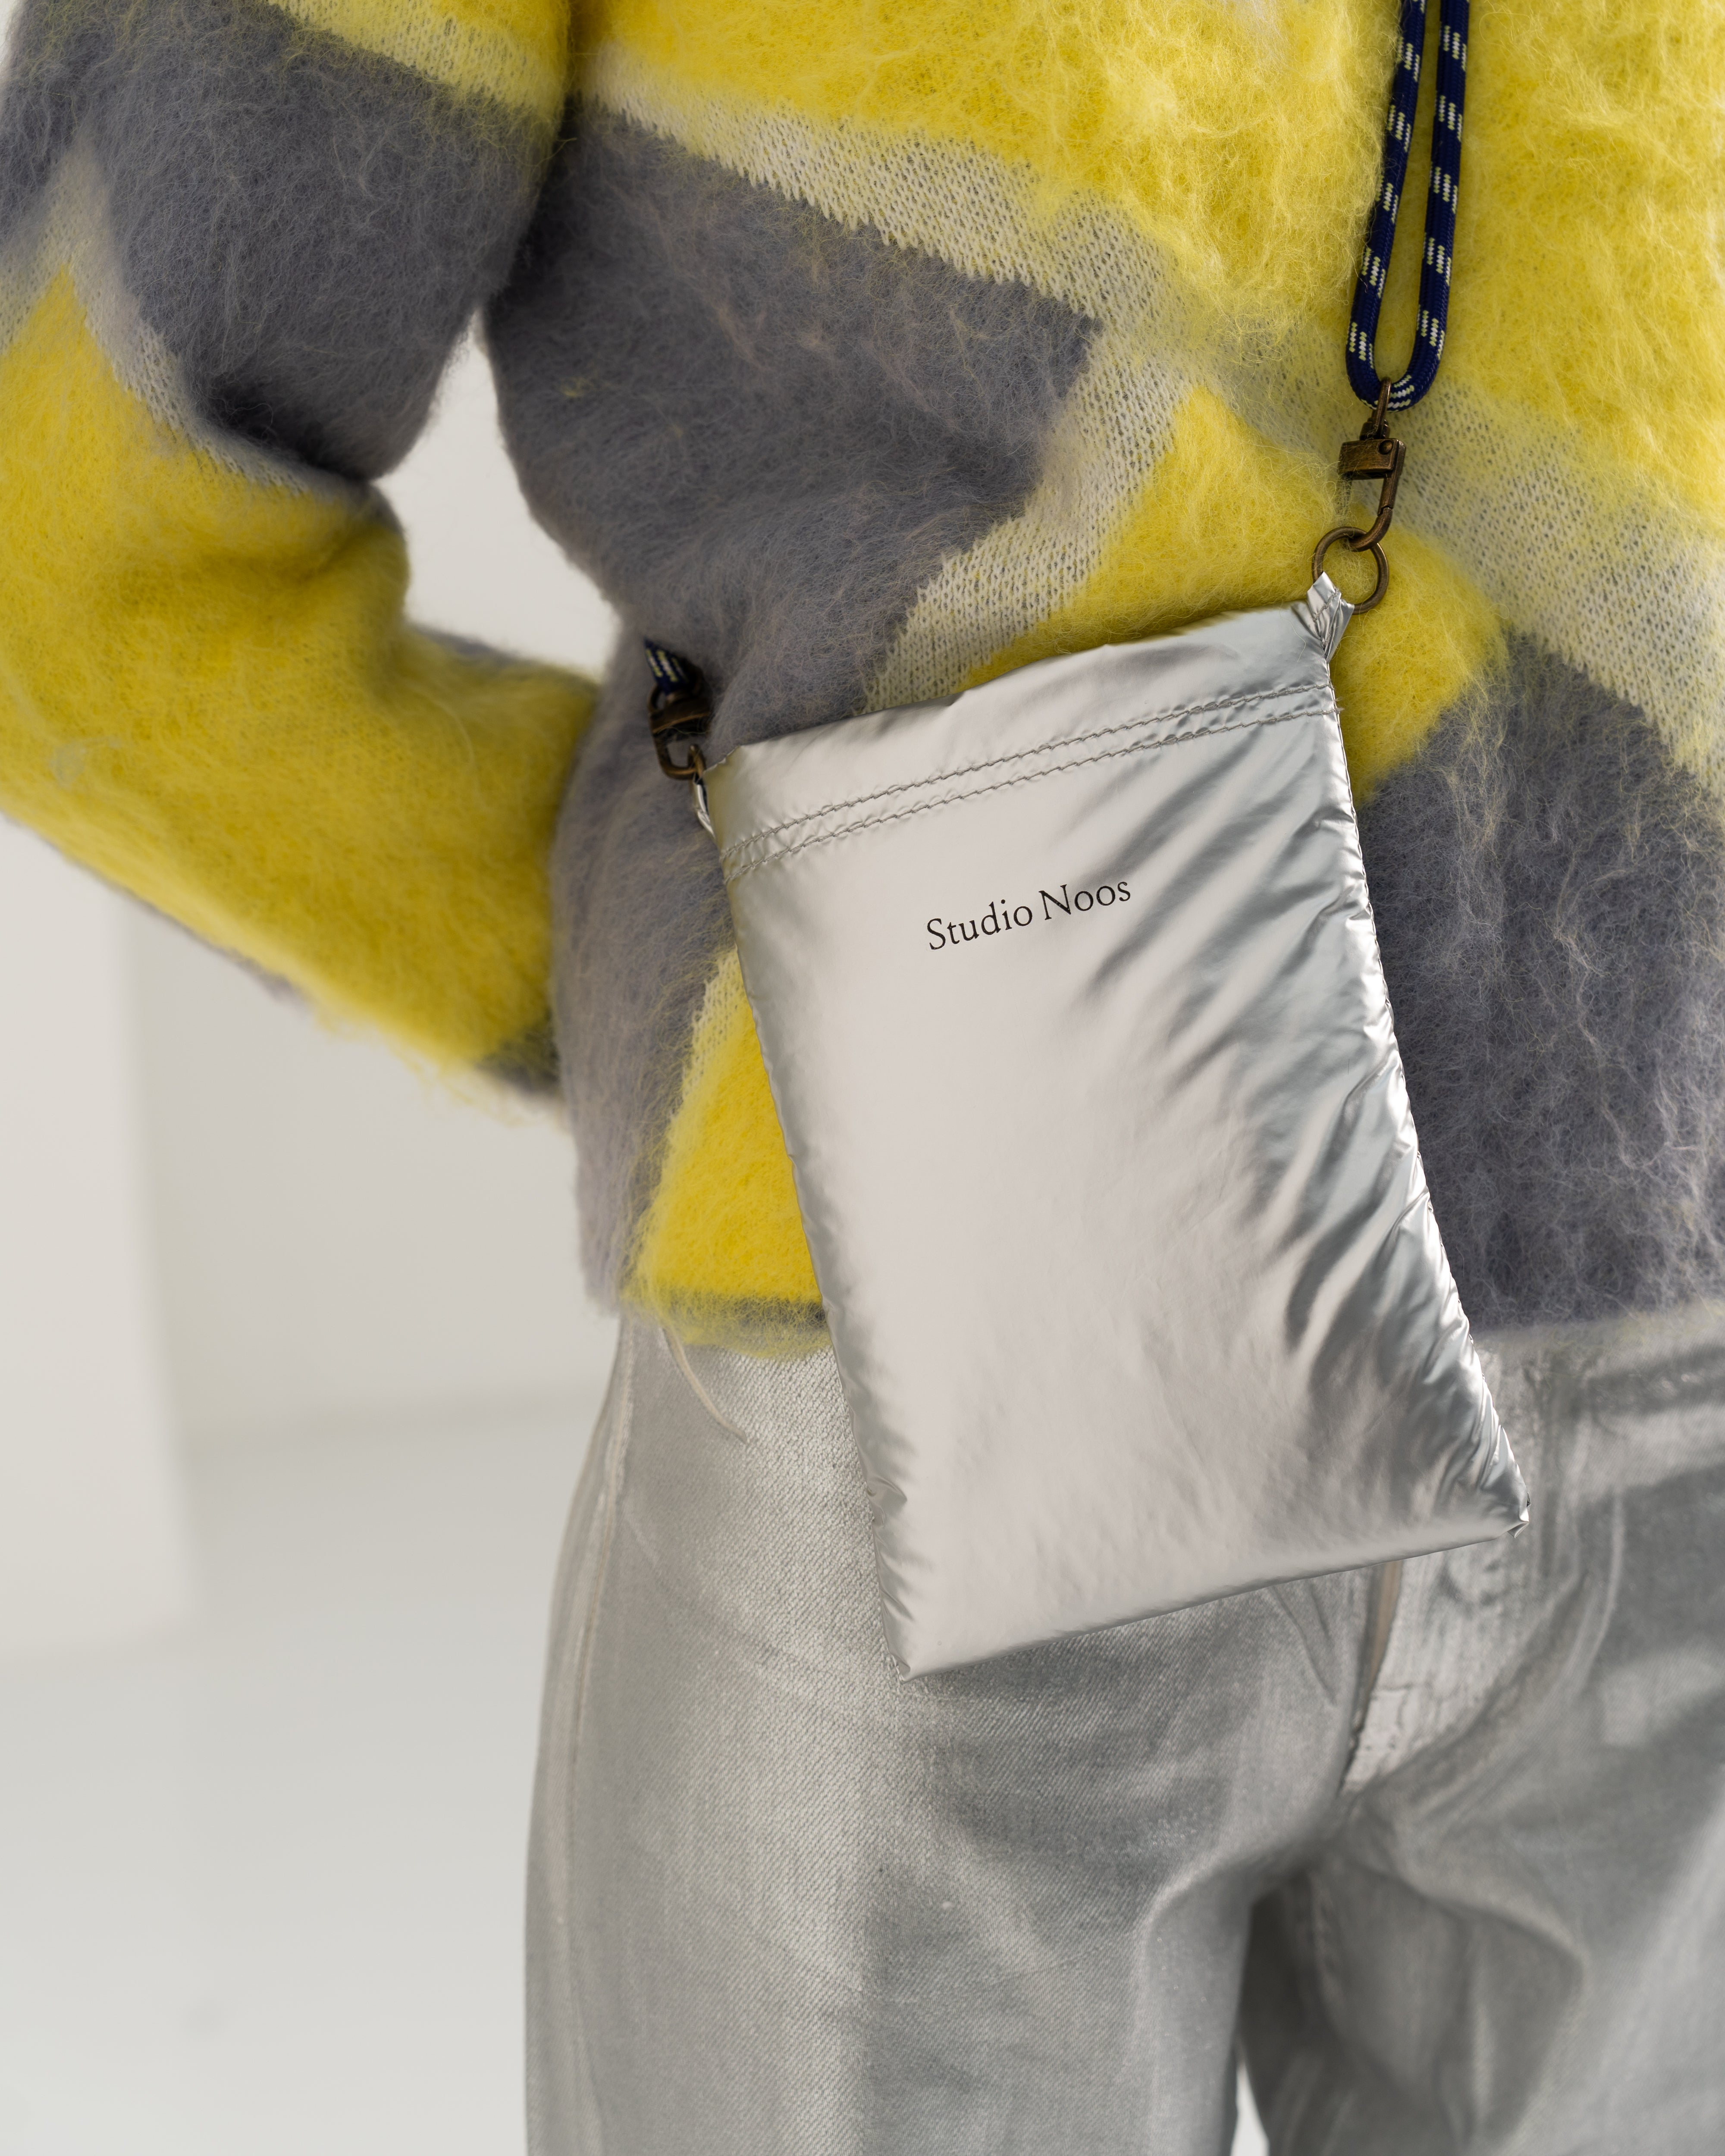 Silver Puffy Phone Bag